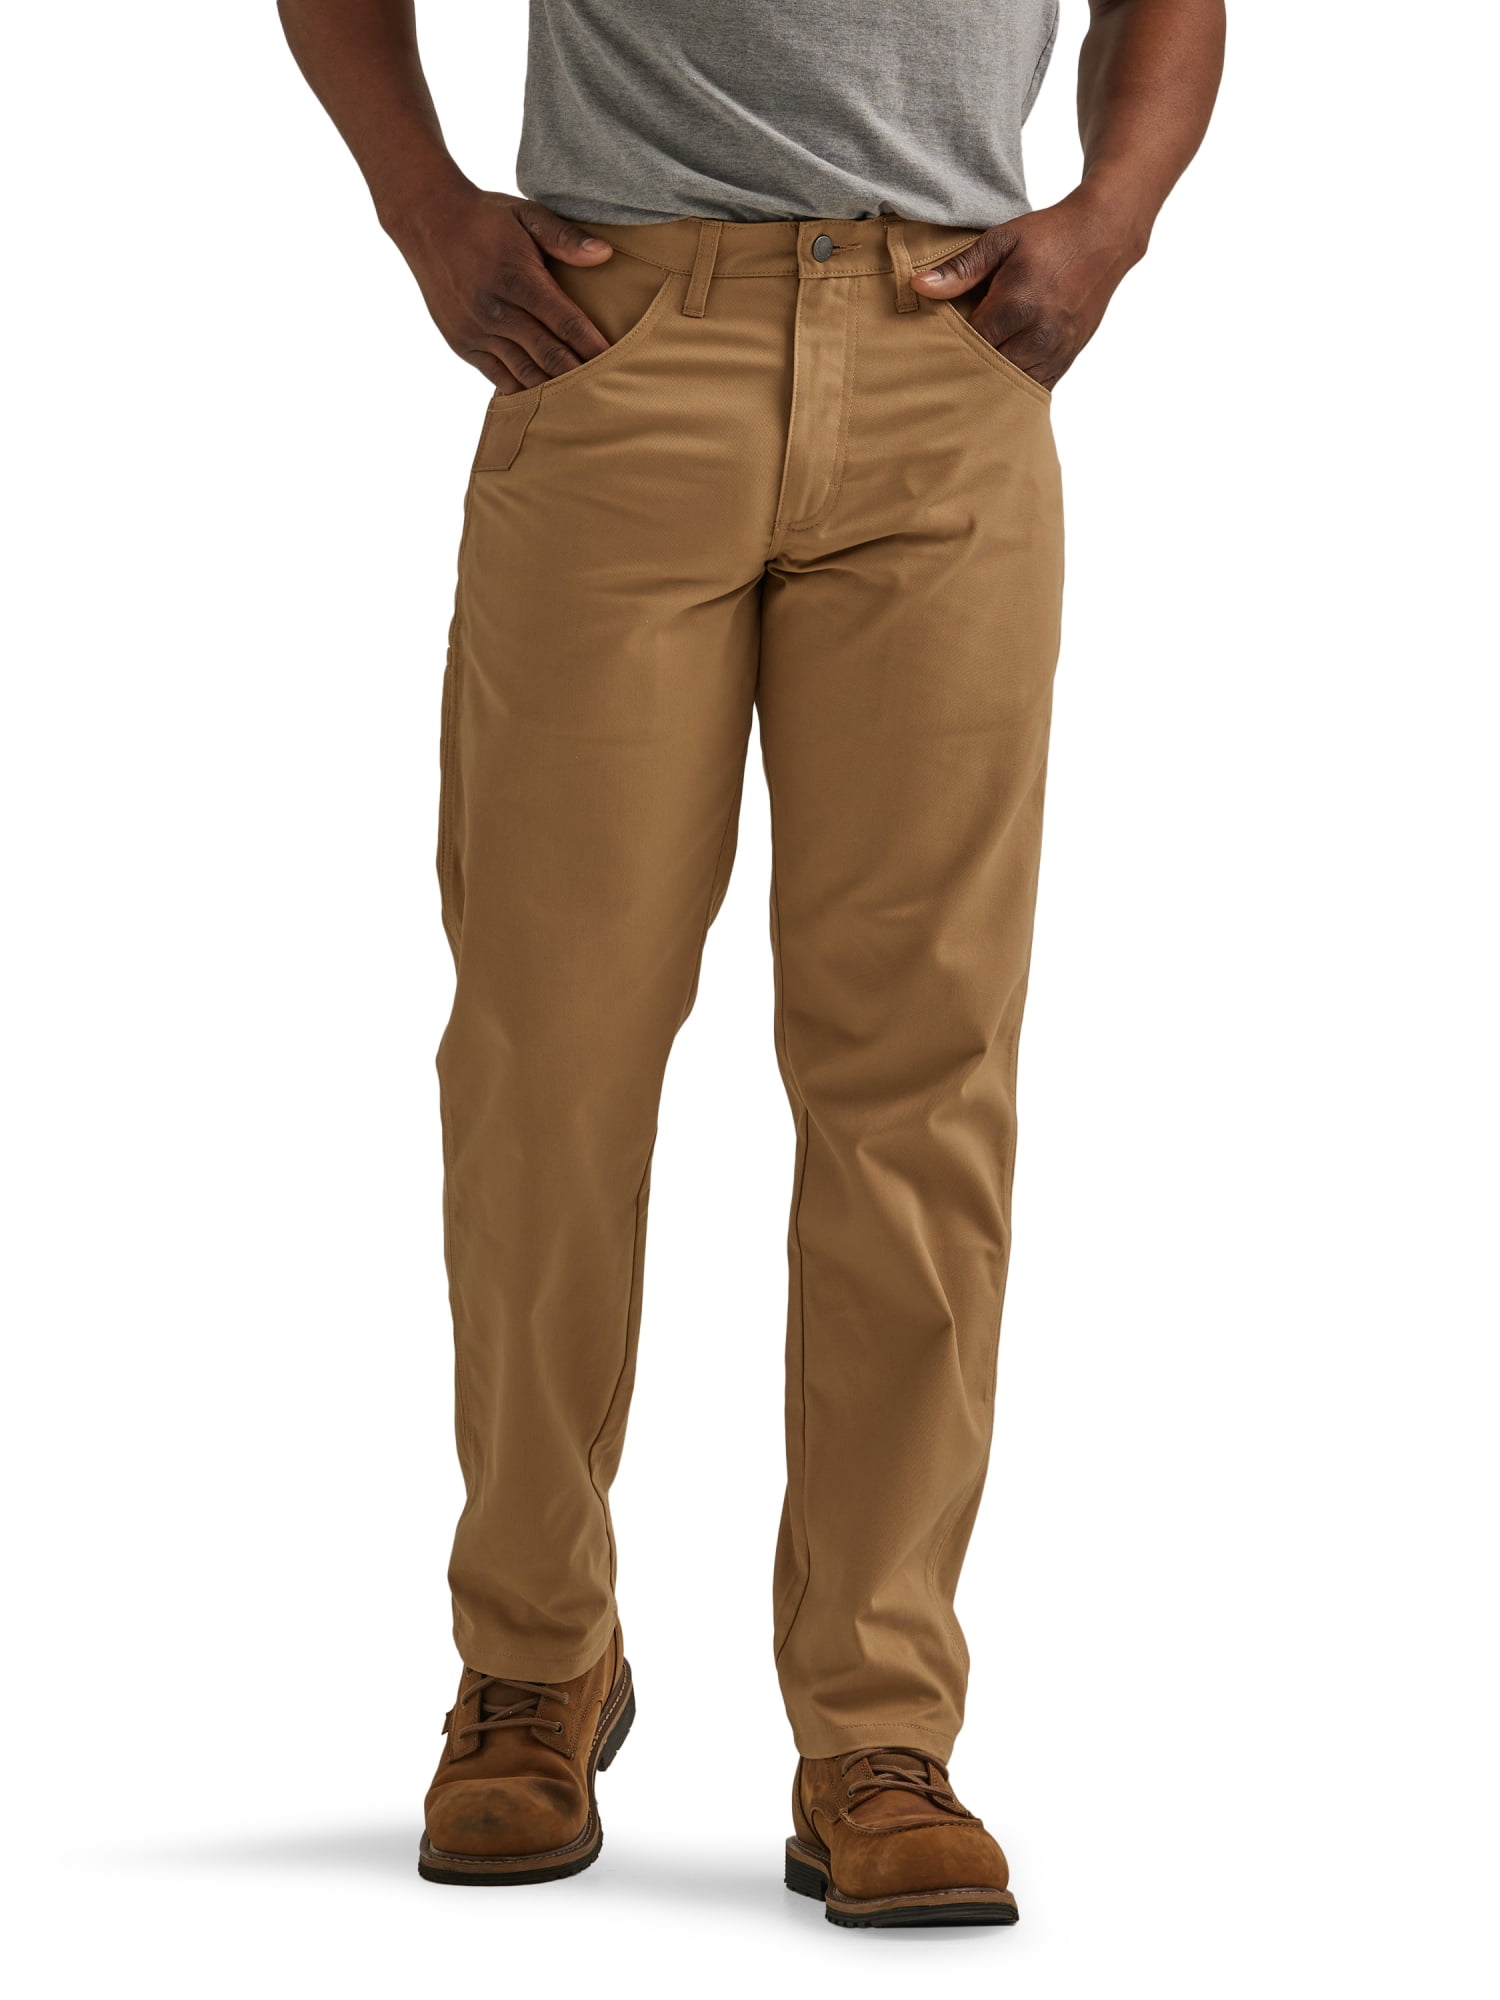 Men's Wrangler Workwear Cargo Pant, Sizes 32-44